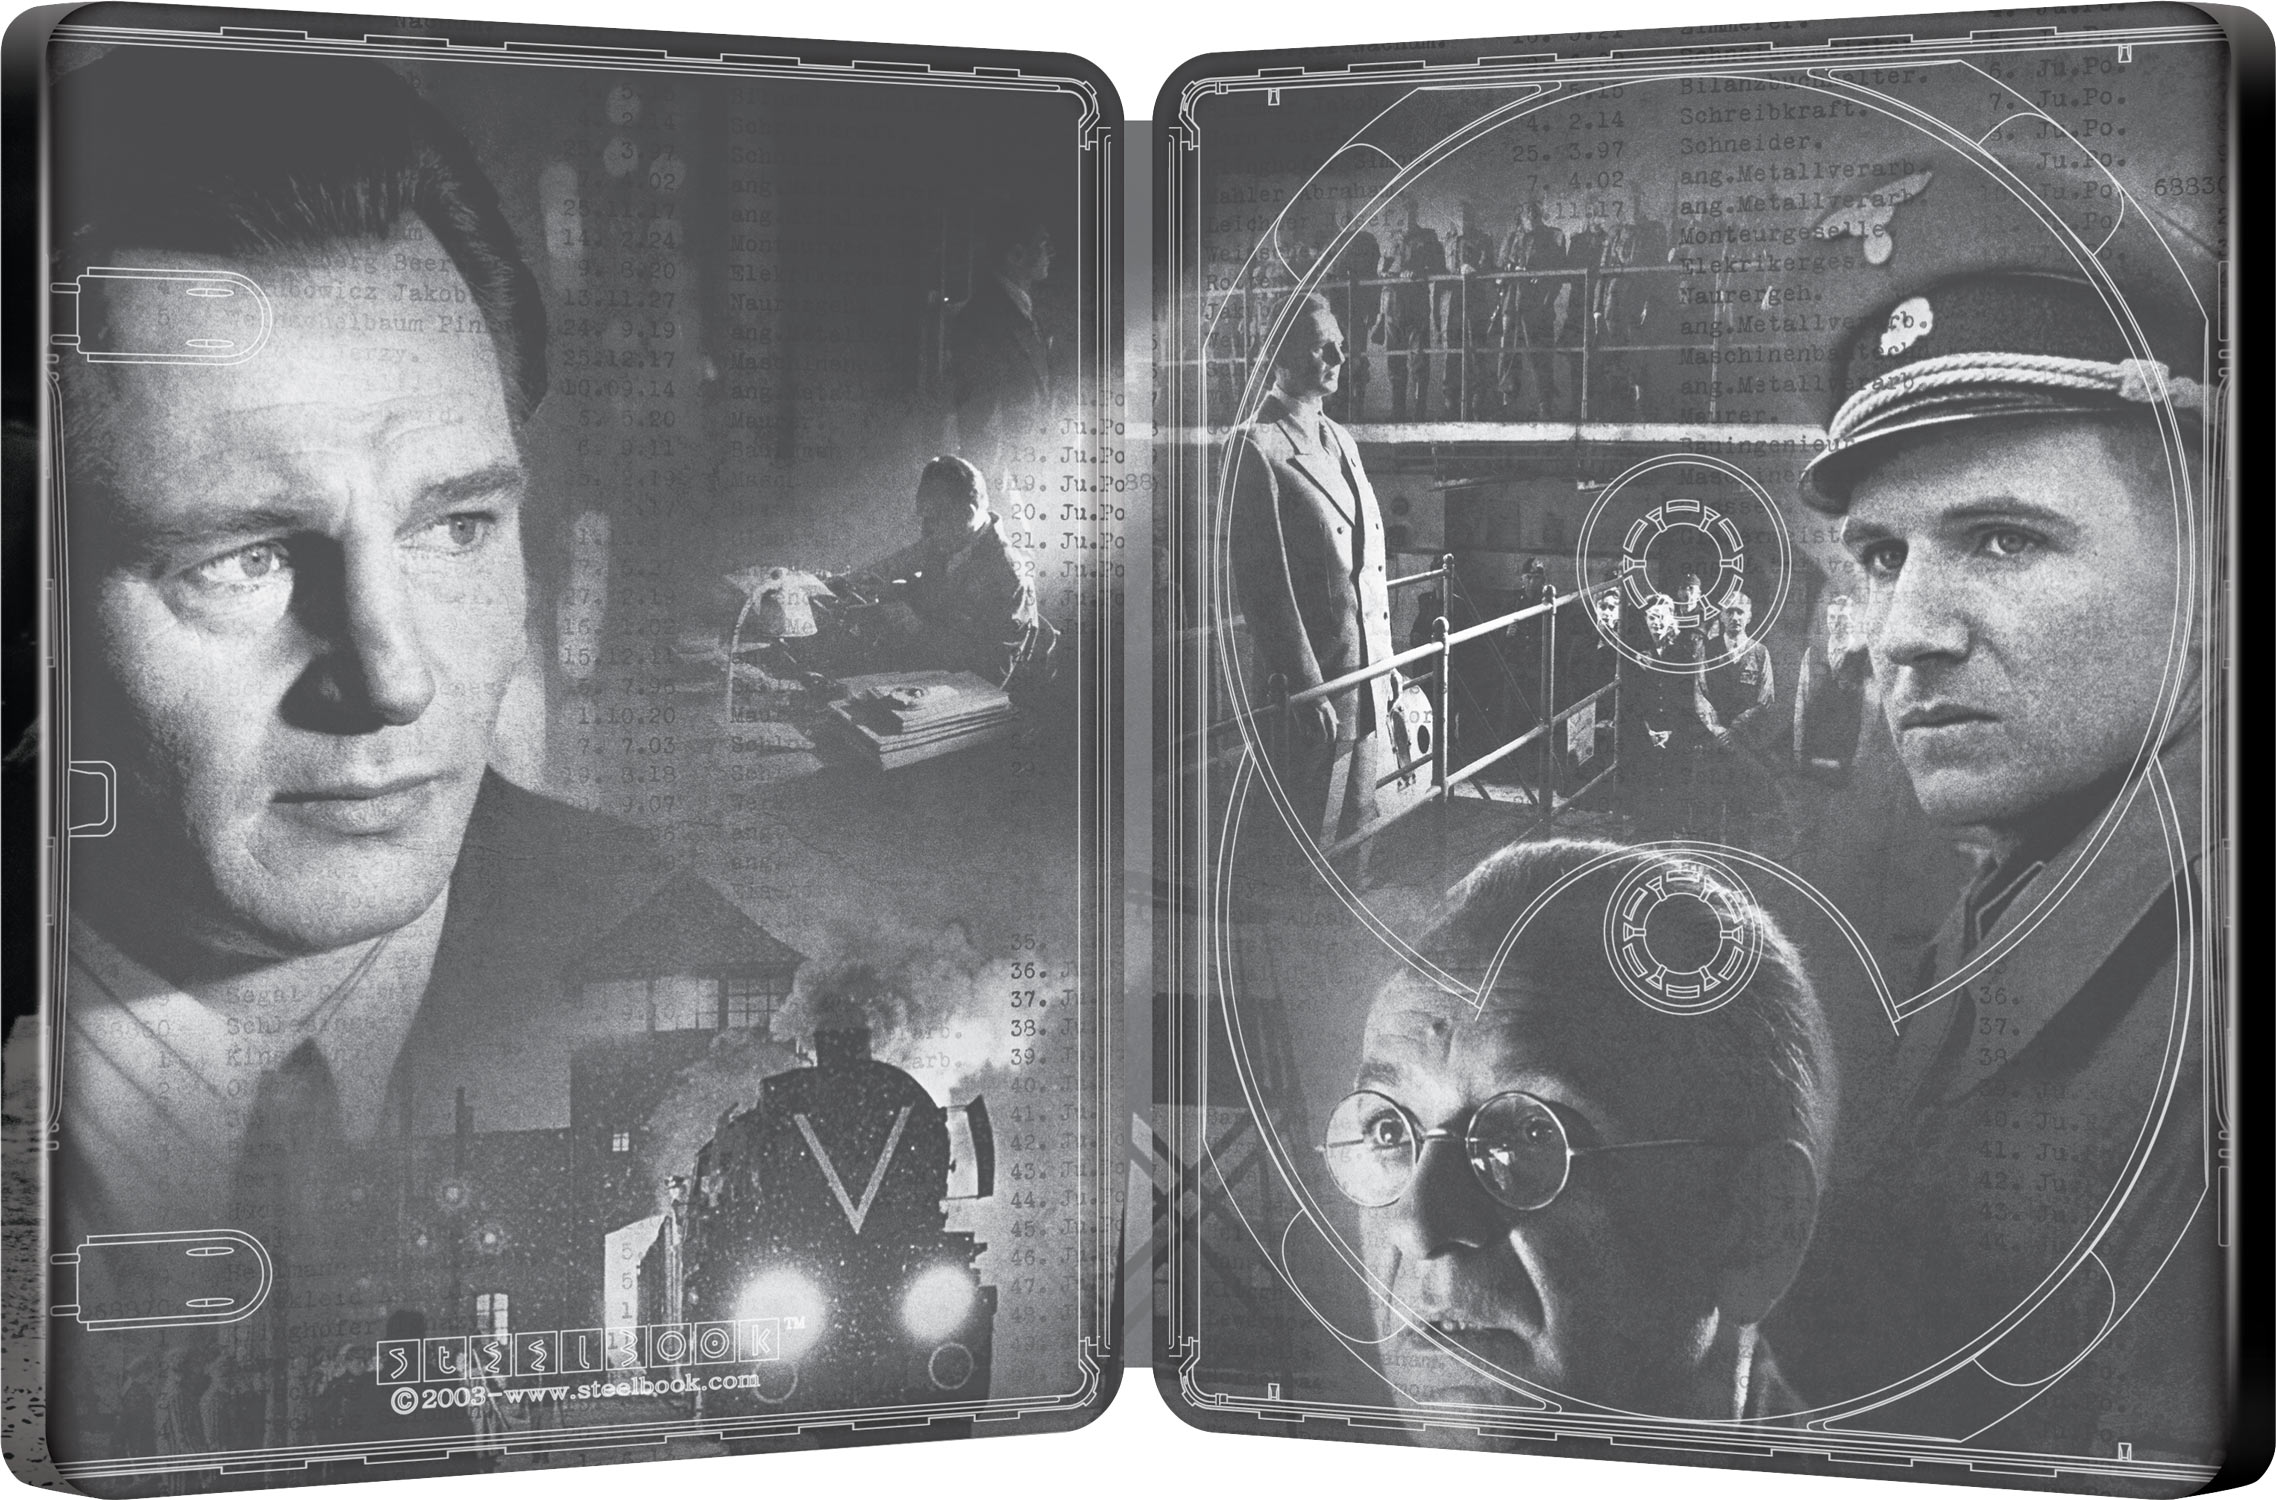 La Liste de Schindler - Édition 25ème anniversaire - 4K Ultra HD + Blu-ray + Blu-ray Bonus + Digital - Boîtier Steelbook